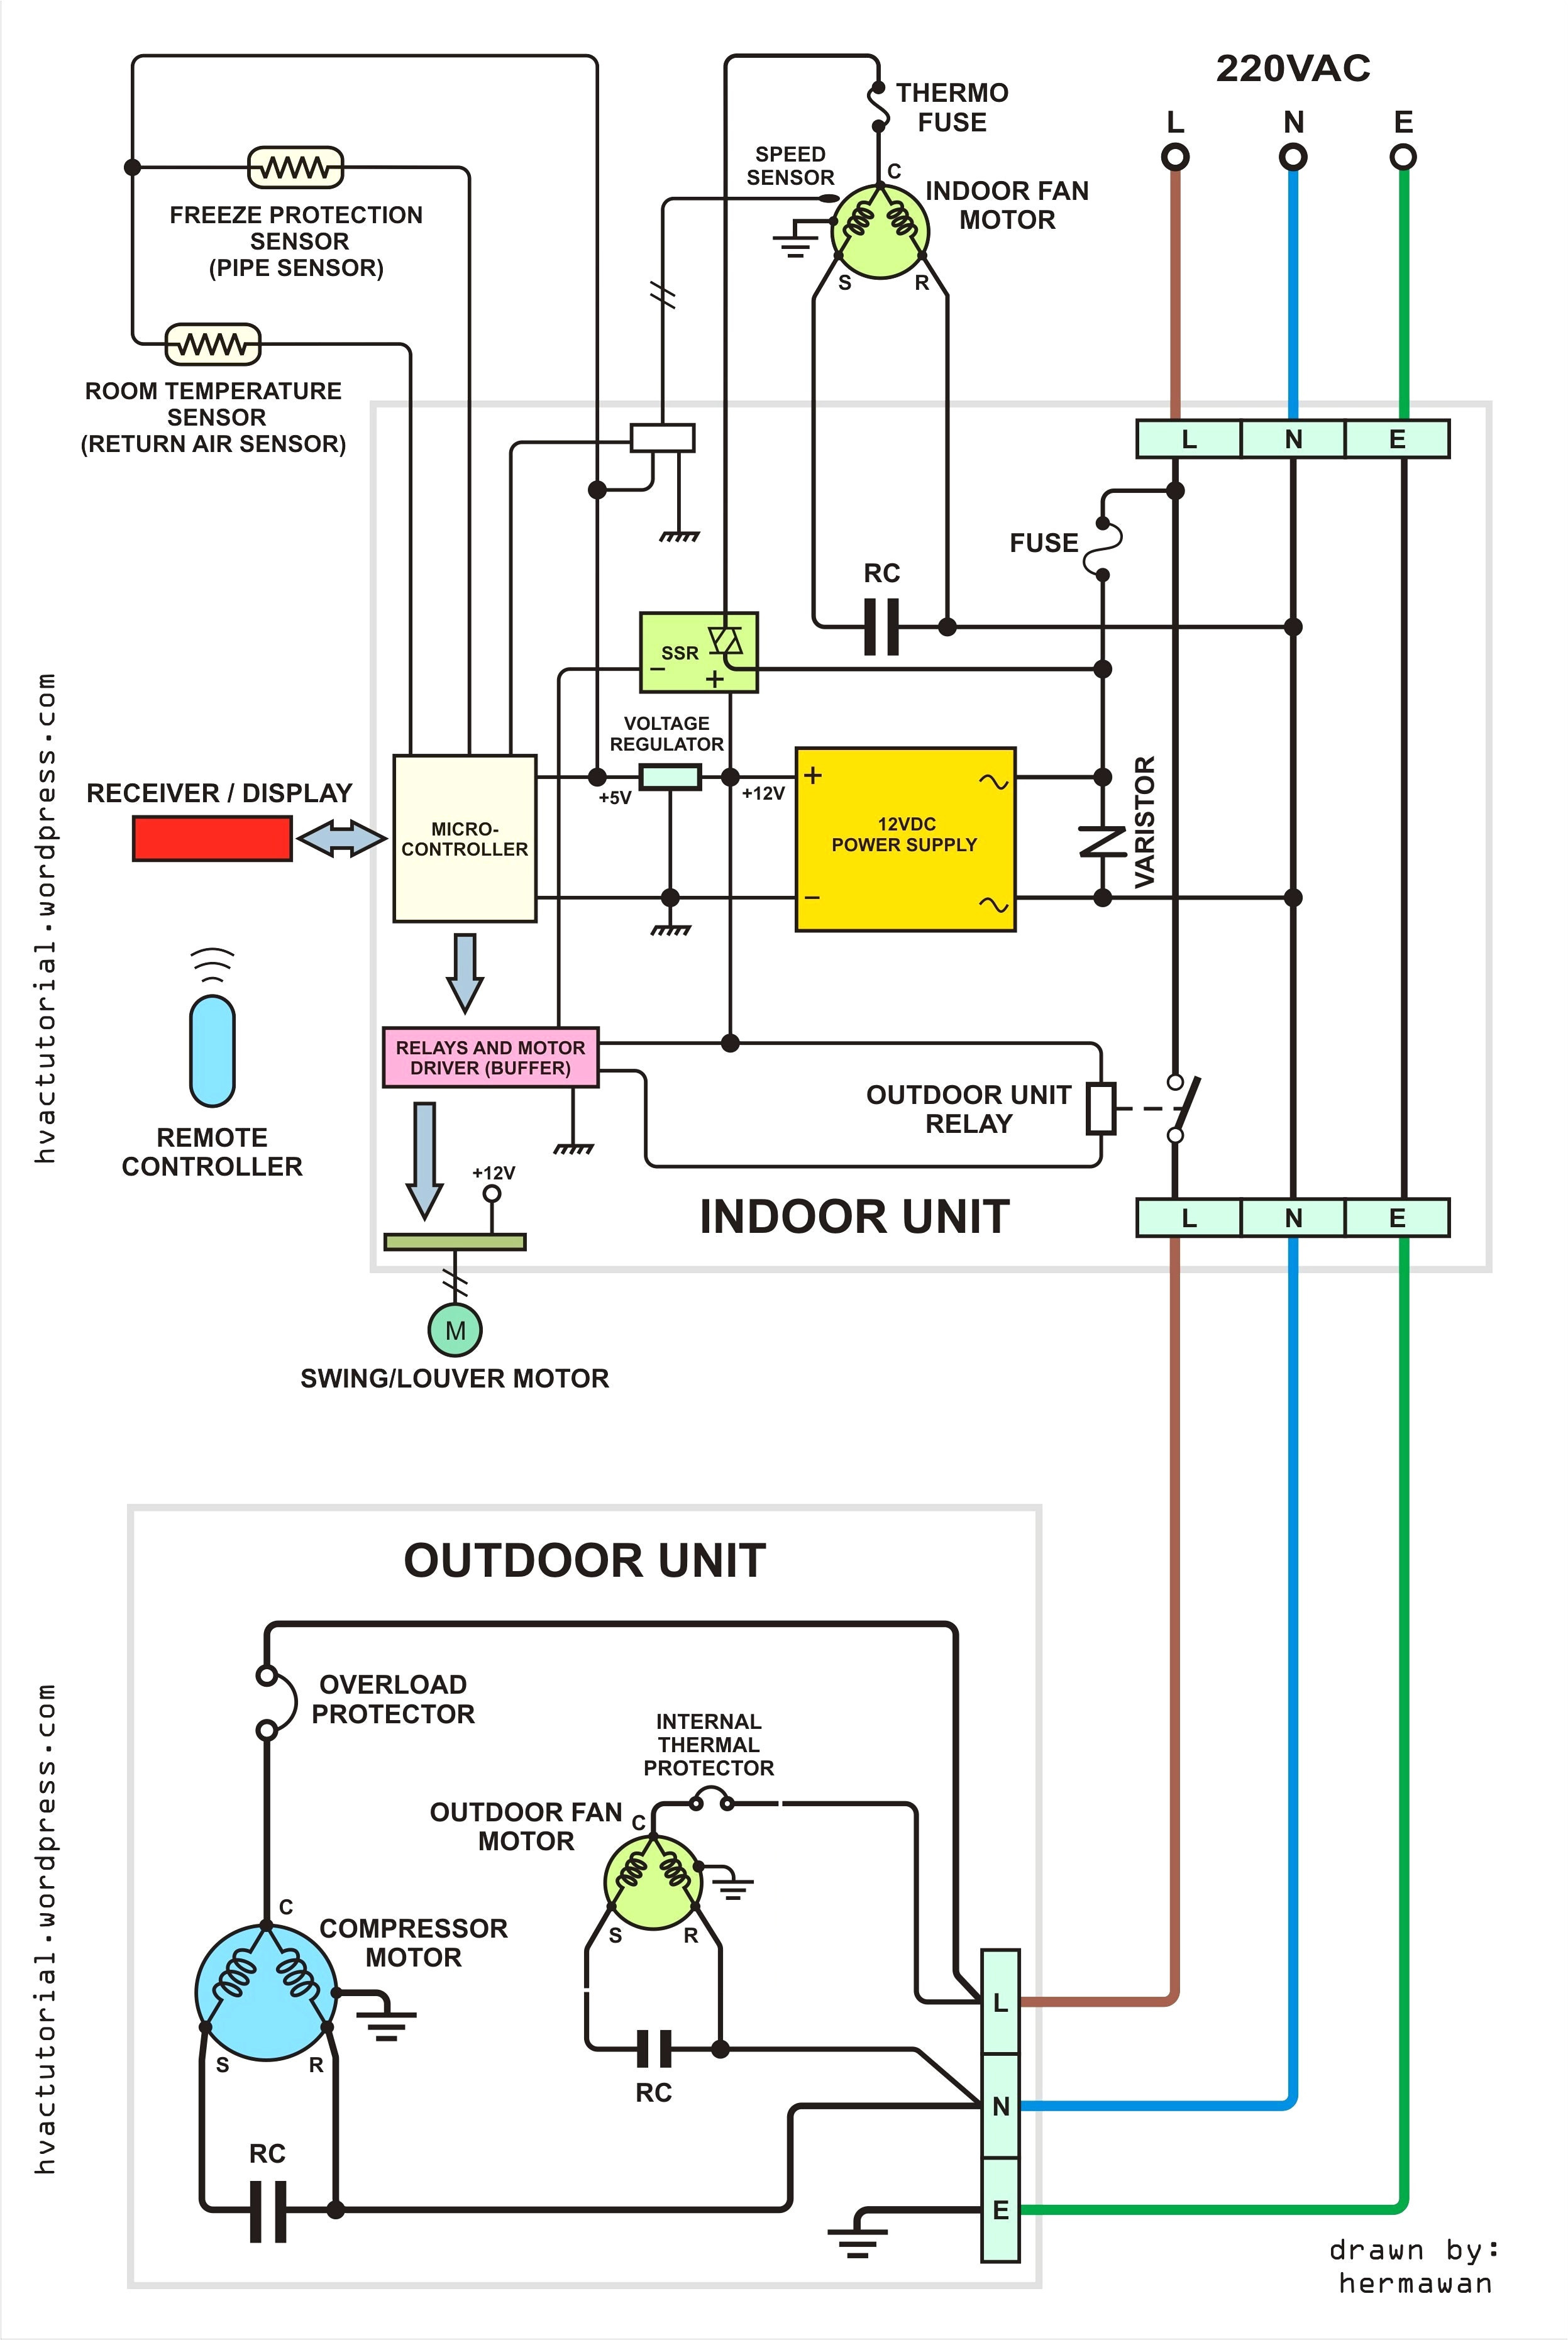 air conditioner wire diagram wire diagrams rh antenamatome1 net truck ac unit wiring diagram 71 chevy